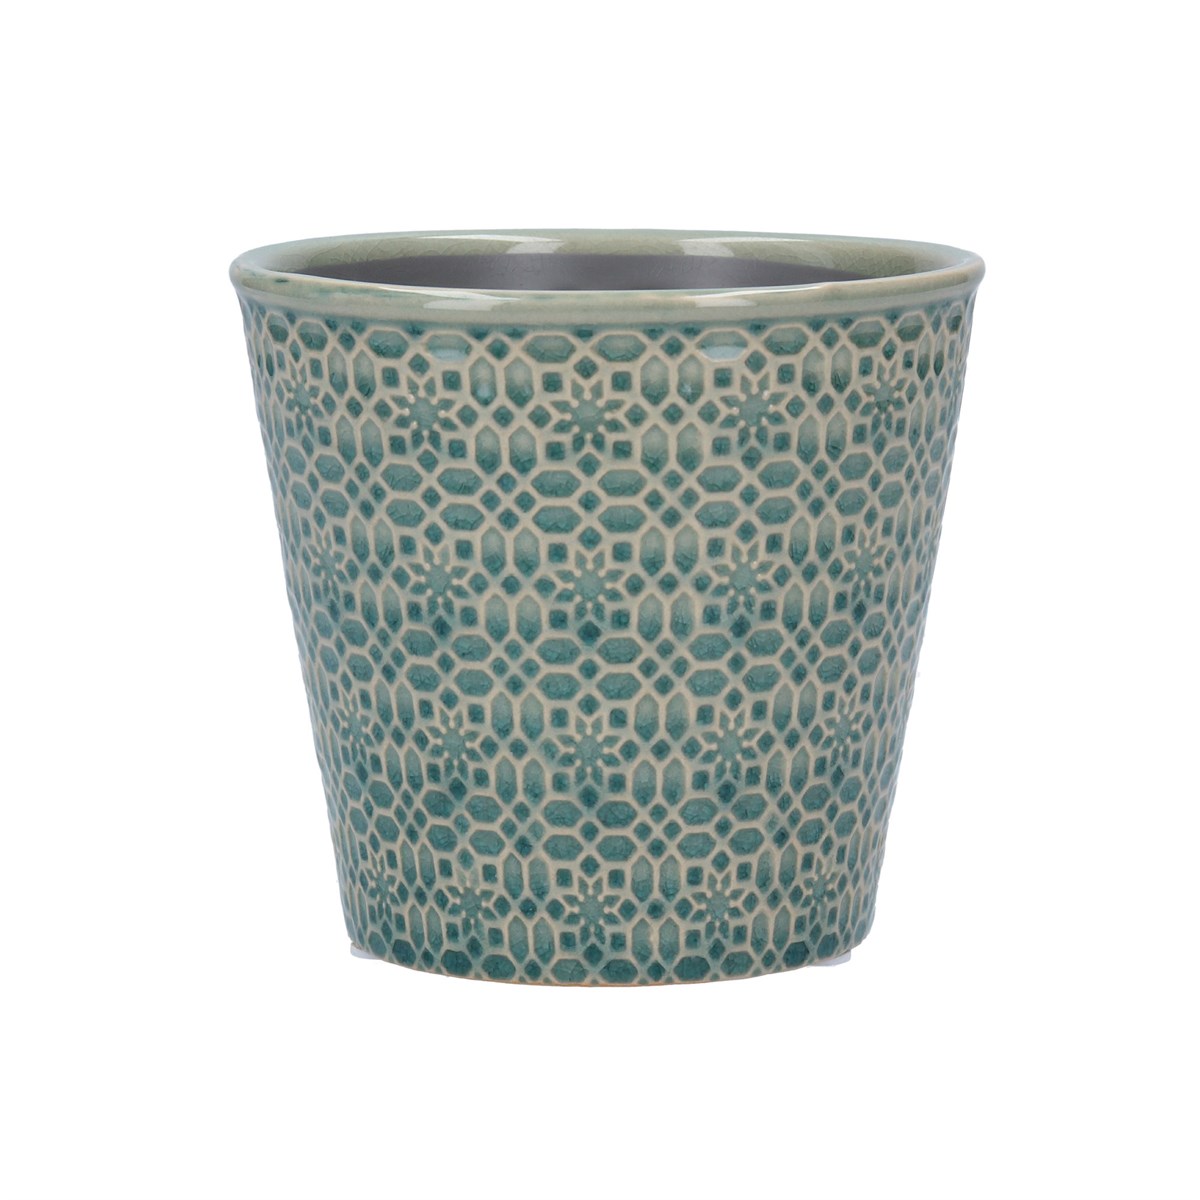 Gray Honeycomb Ceramic Pot Cover Small By Gisela Graham 